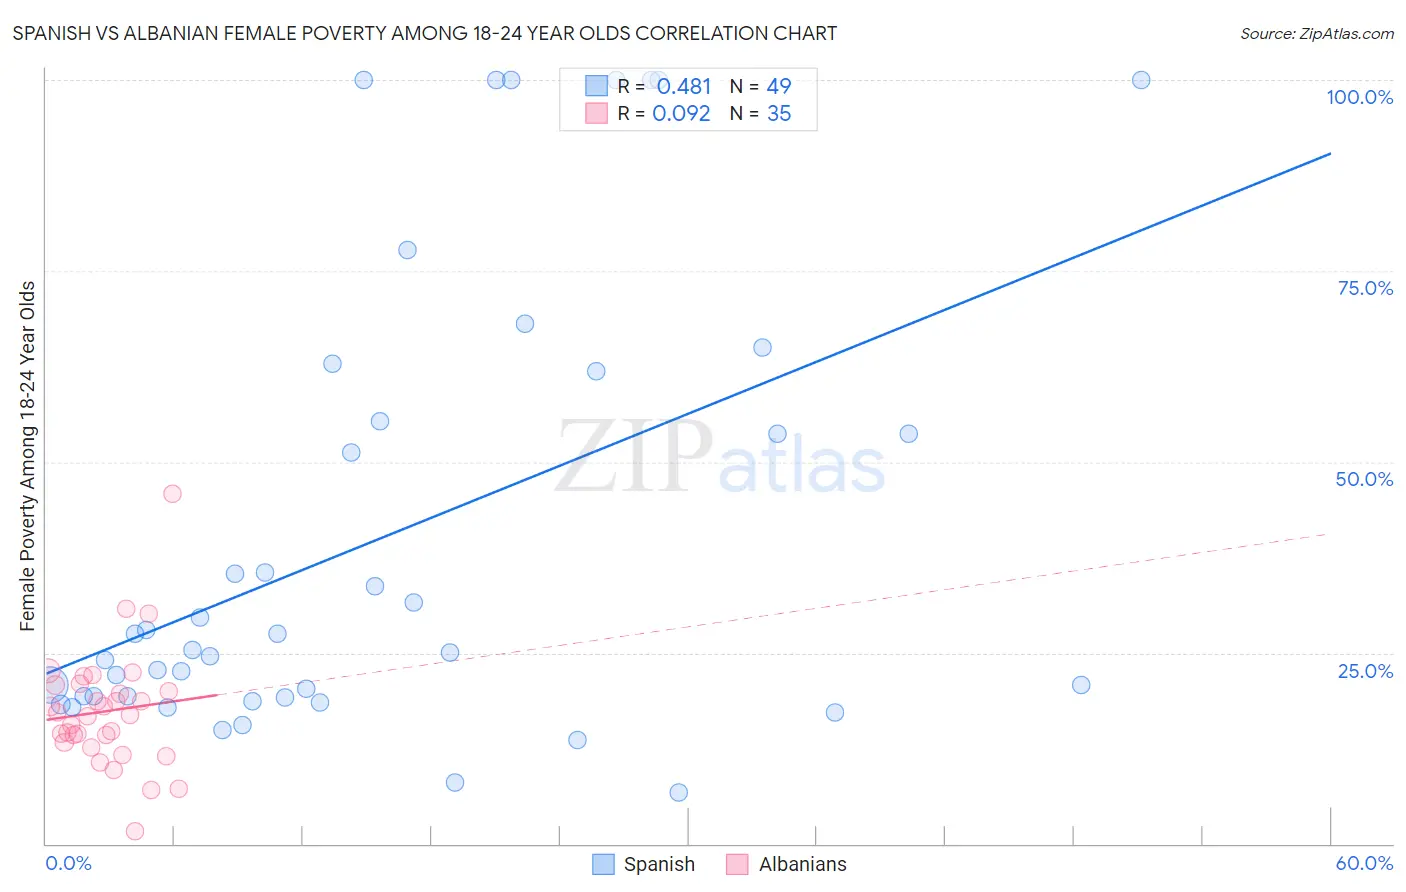 Spanish vs Albanian Female Poverty Among 18-24 Year Olds